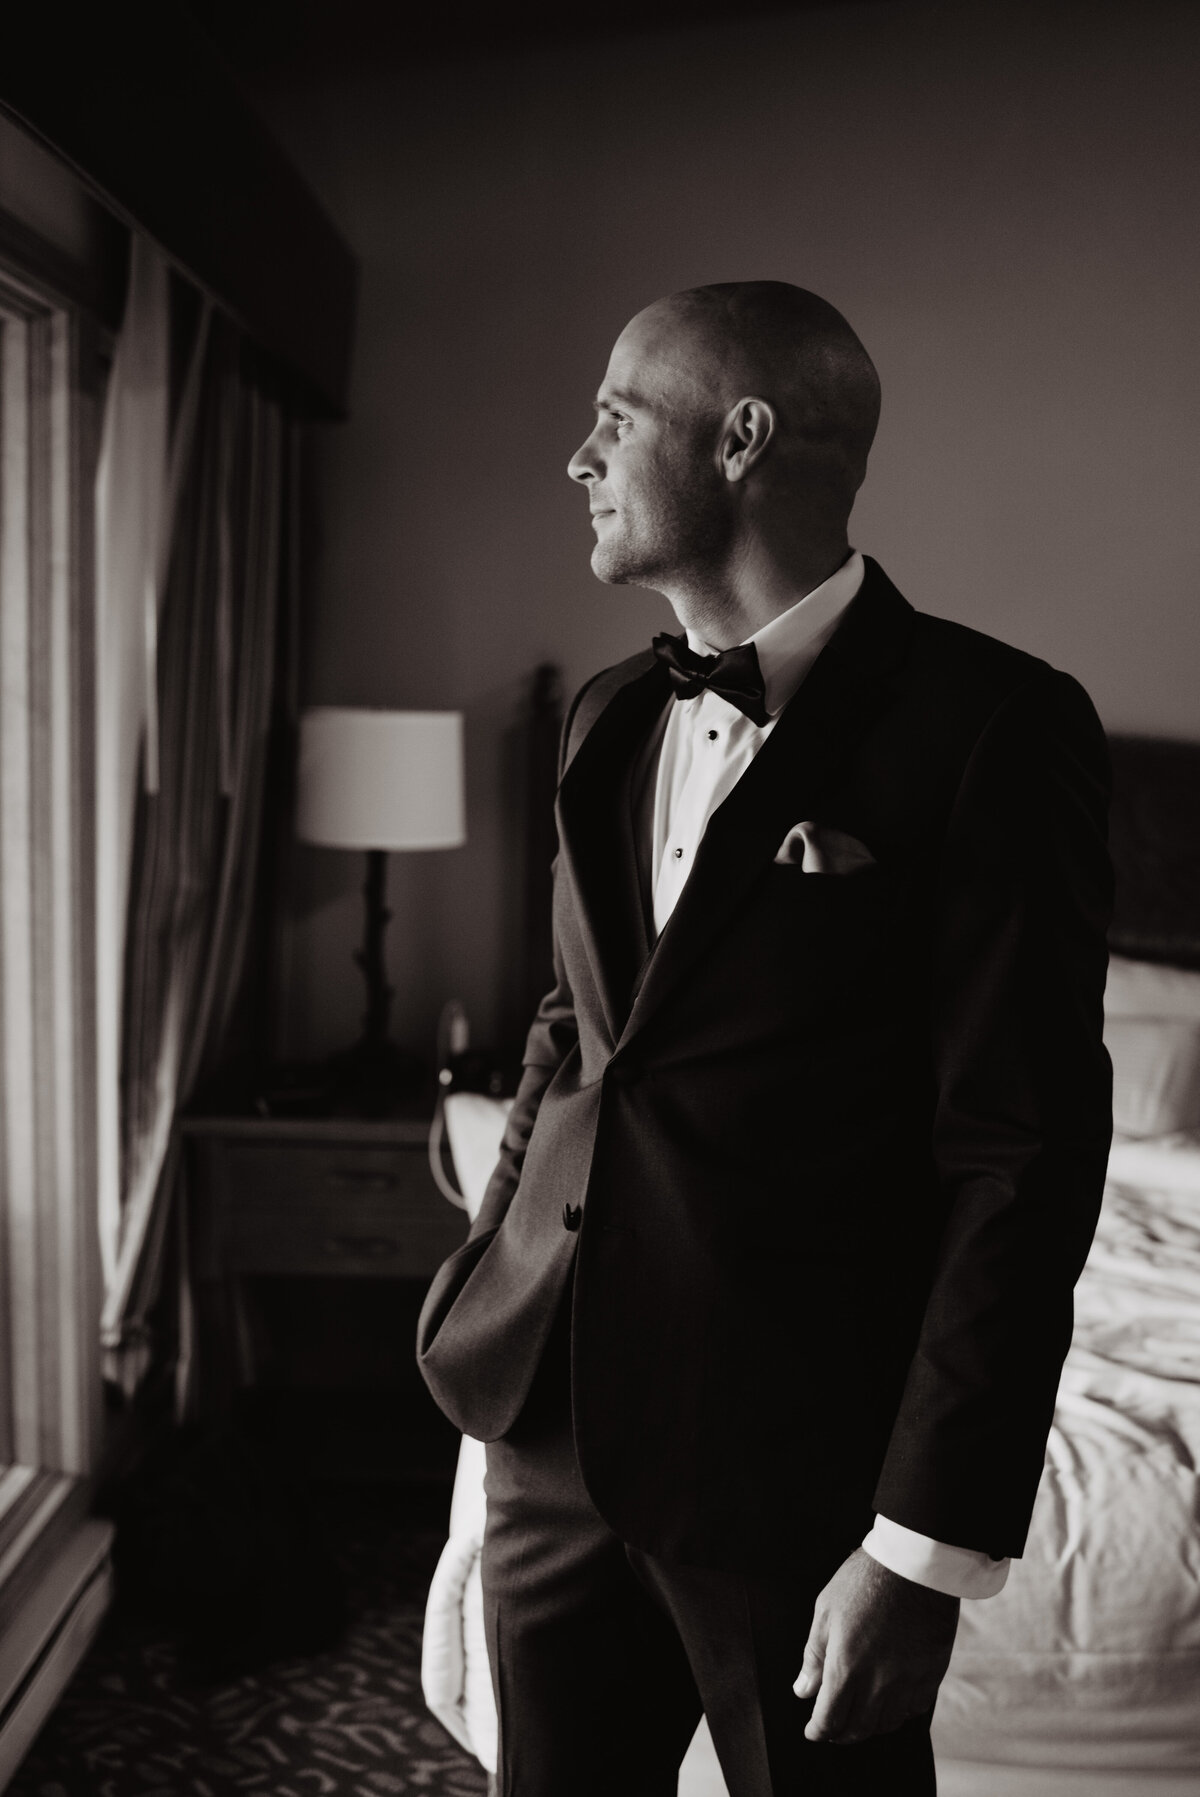 Jackson Hole photographers capture groom wearing tuxedo looking outside